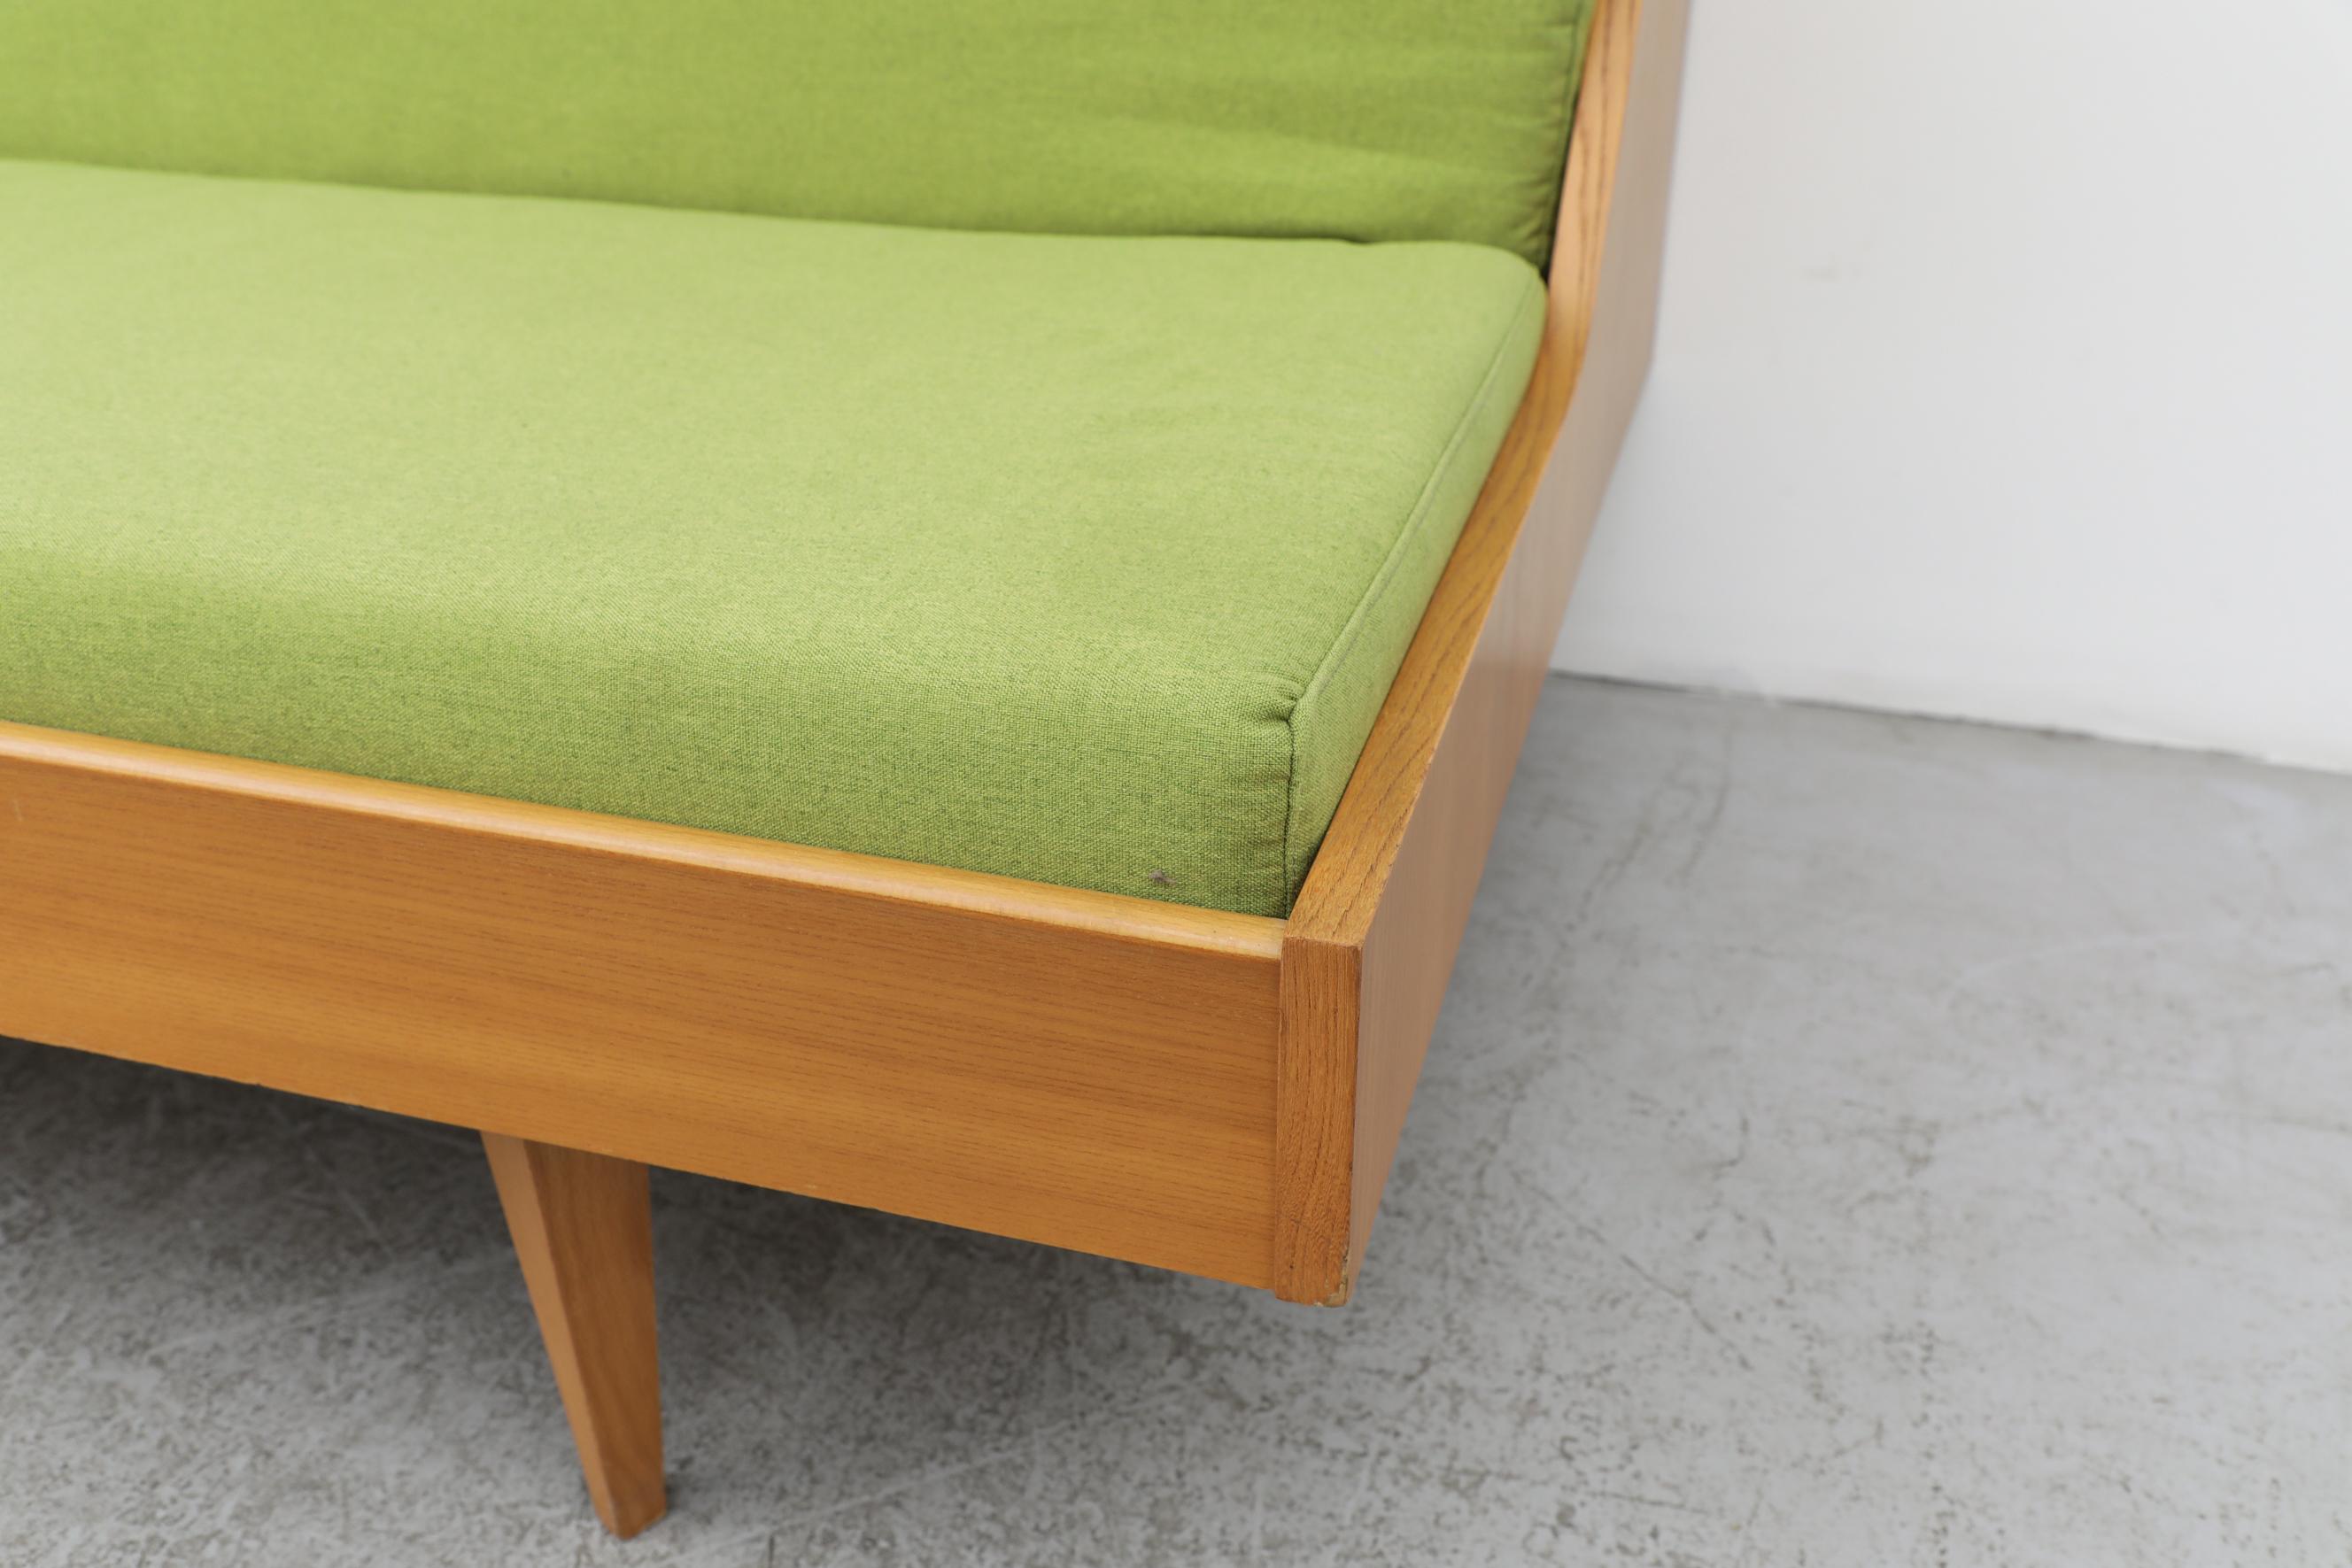 Hans Wegner 'attr' Model GE 258 for Getama Sleeper Sofa With Green Upholstery 1